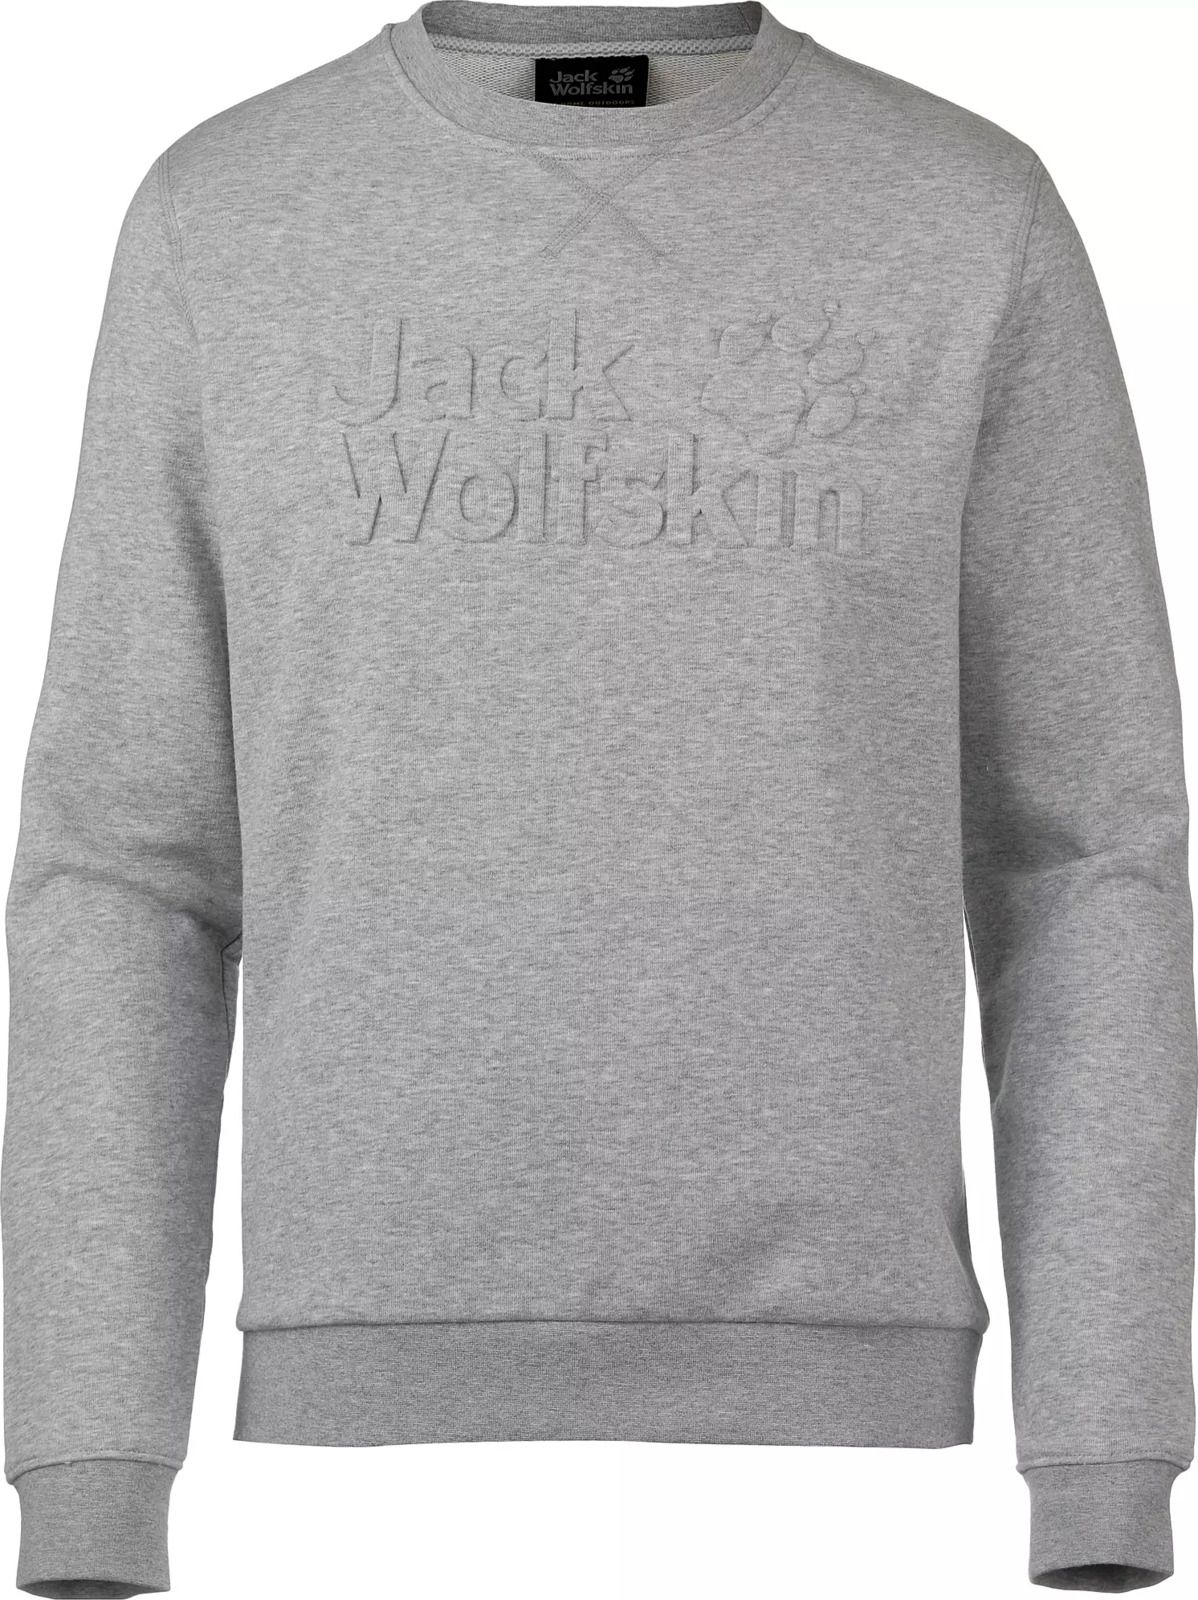   Jack Wolfskin Logo Sweatshirt M, : -. 5018891-6111.  XXL (54)